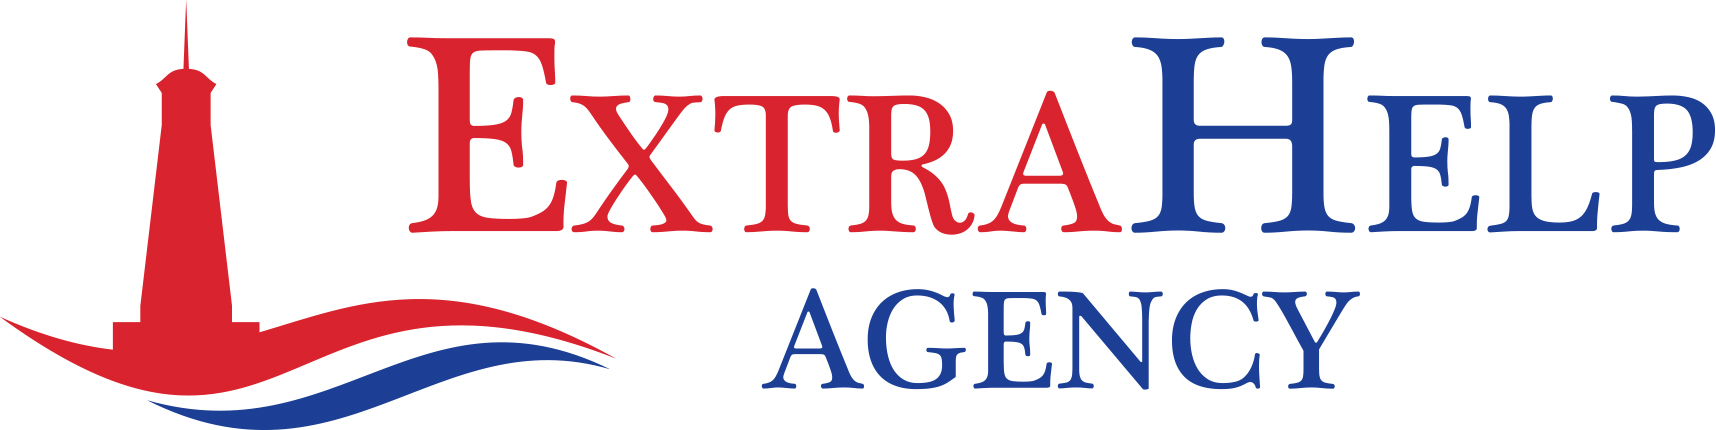 Extra Help Agency LLC Logo